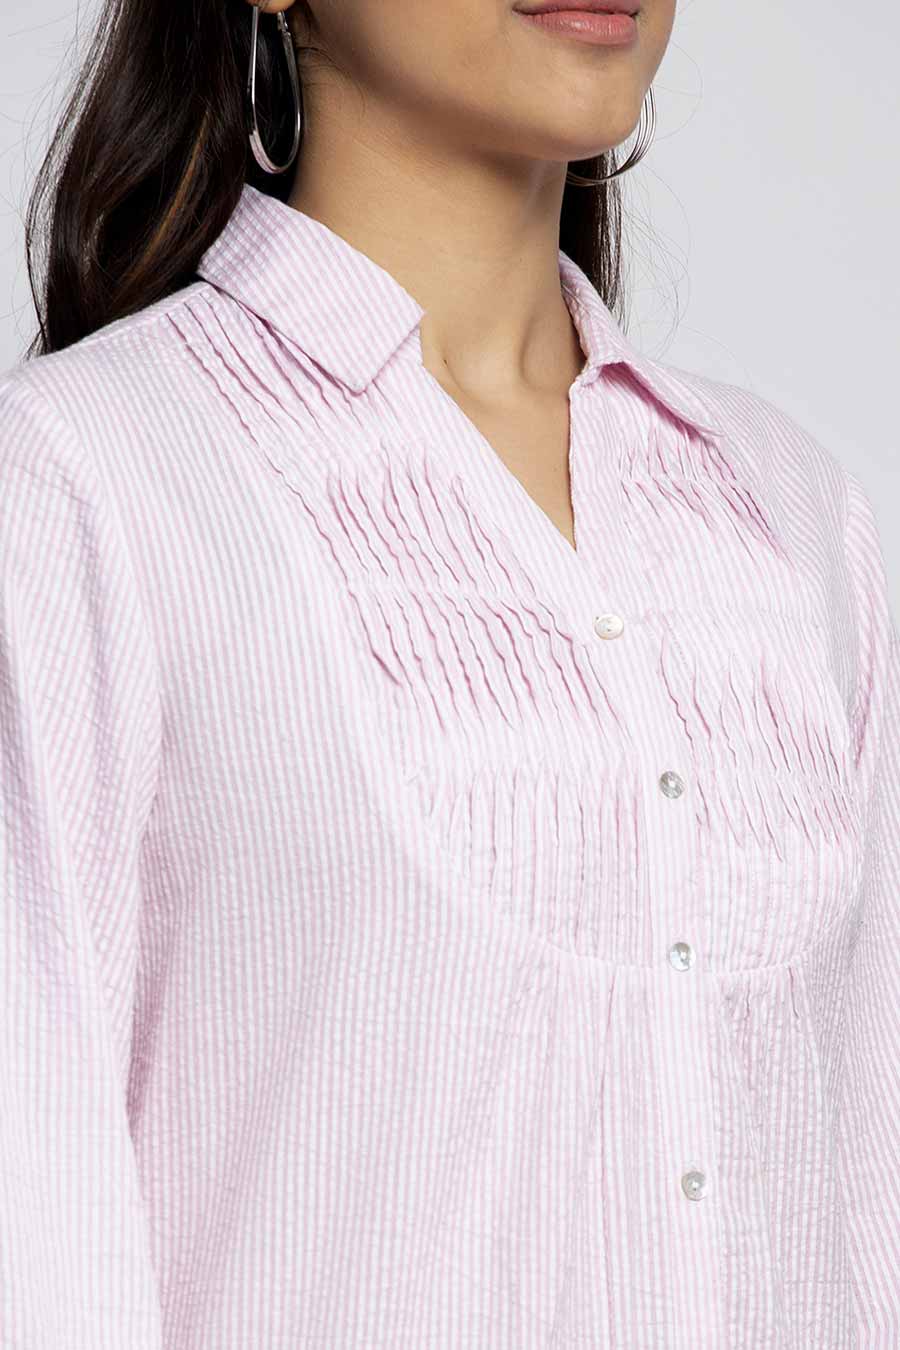 Pink Striped Shirt Tunic With Pintucks